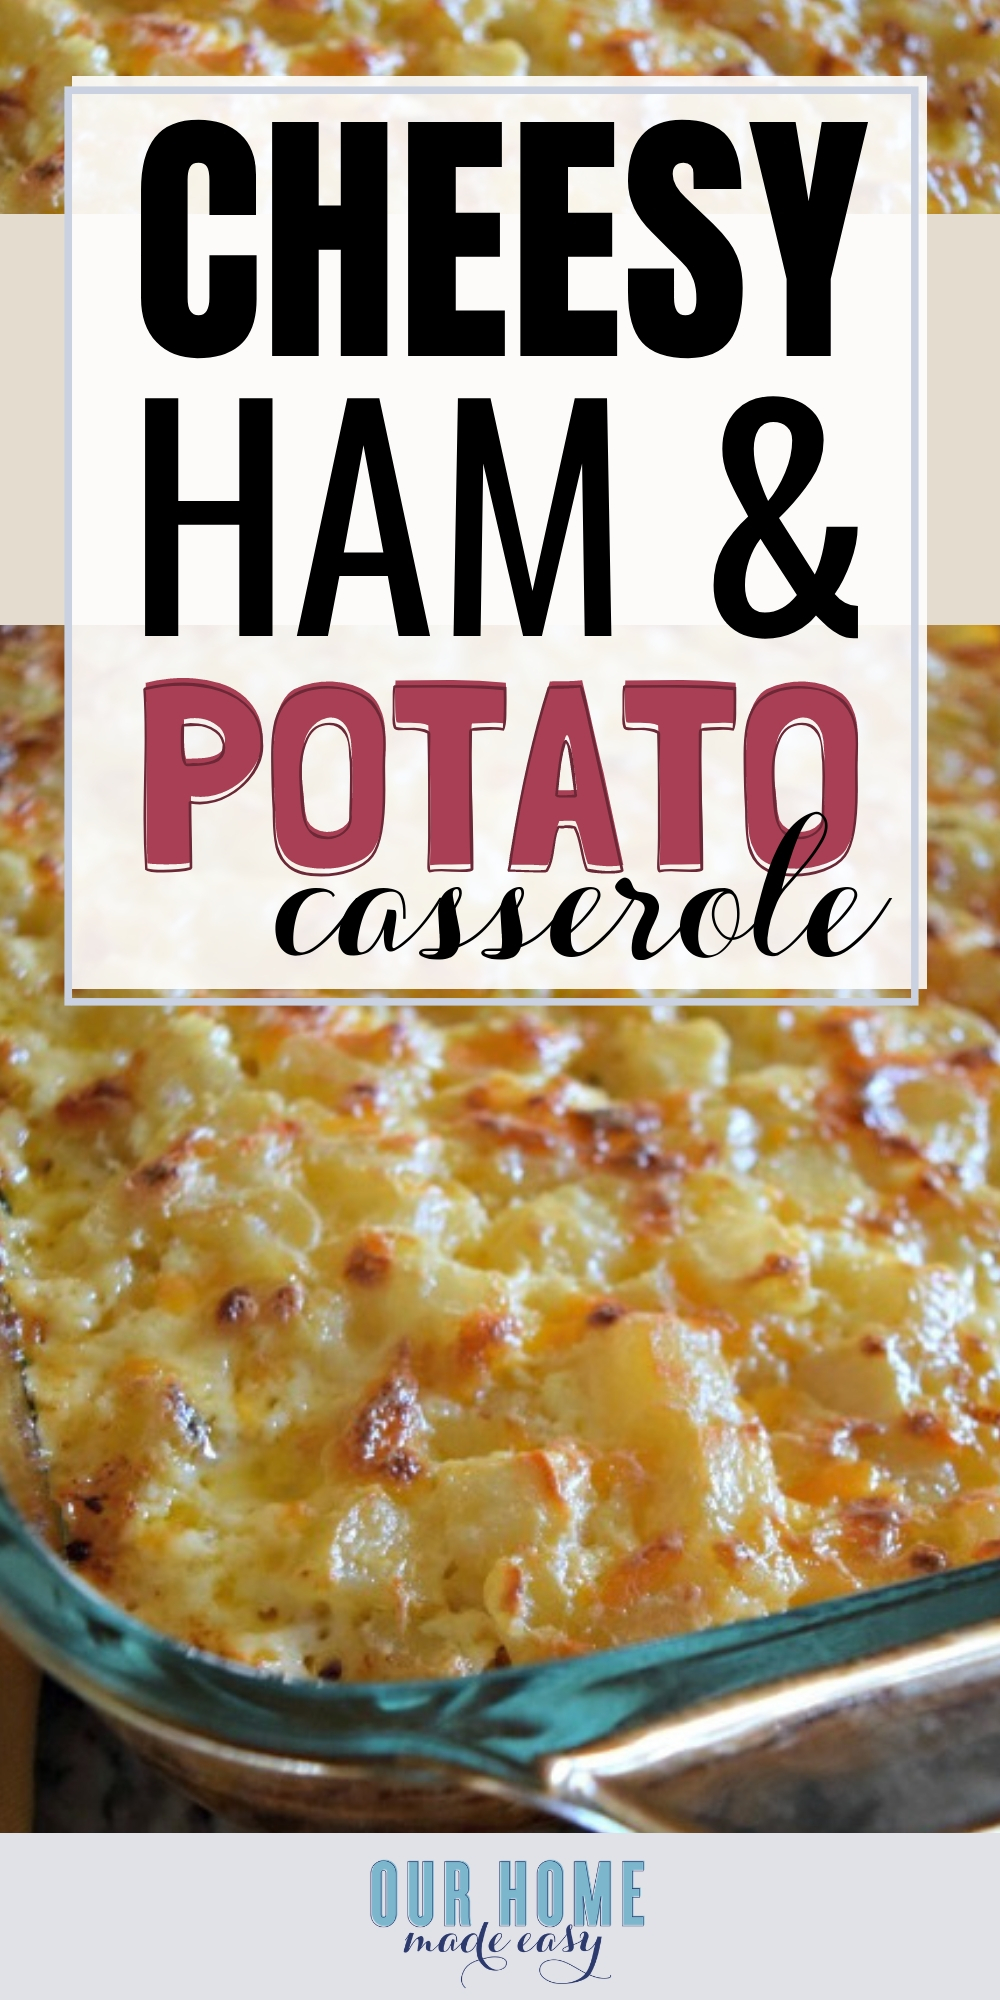 Cheesy Ham & Potato Casserole - Sally's Baking Addiction